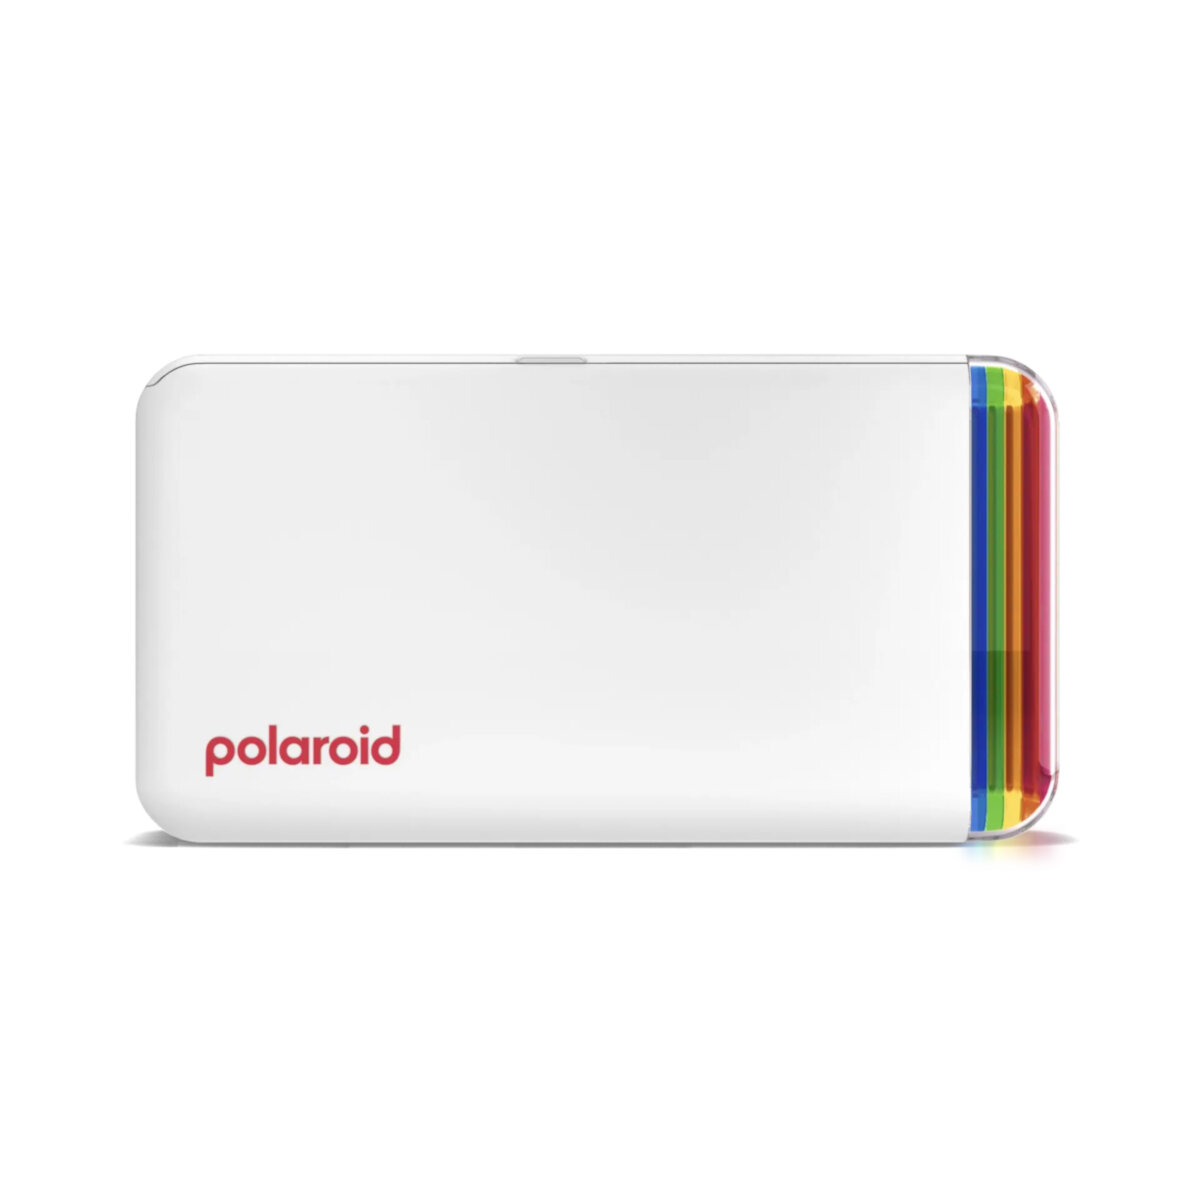 Kieszonkowa drukarka Polaroid Hi-Print biała od frontu na białym tle